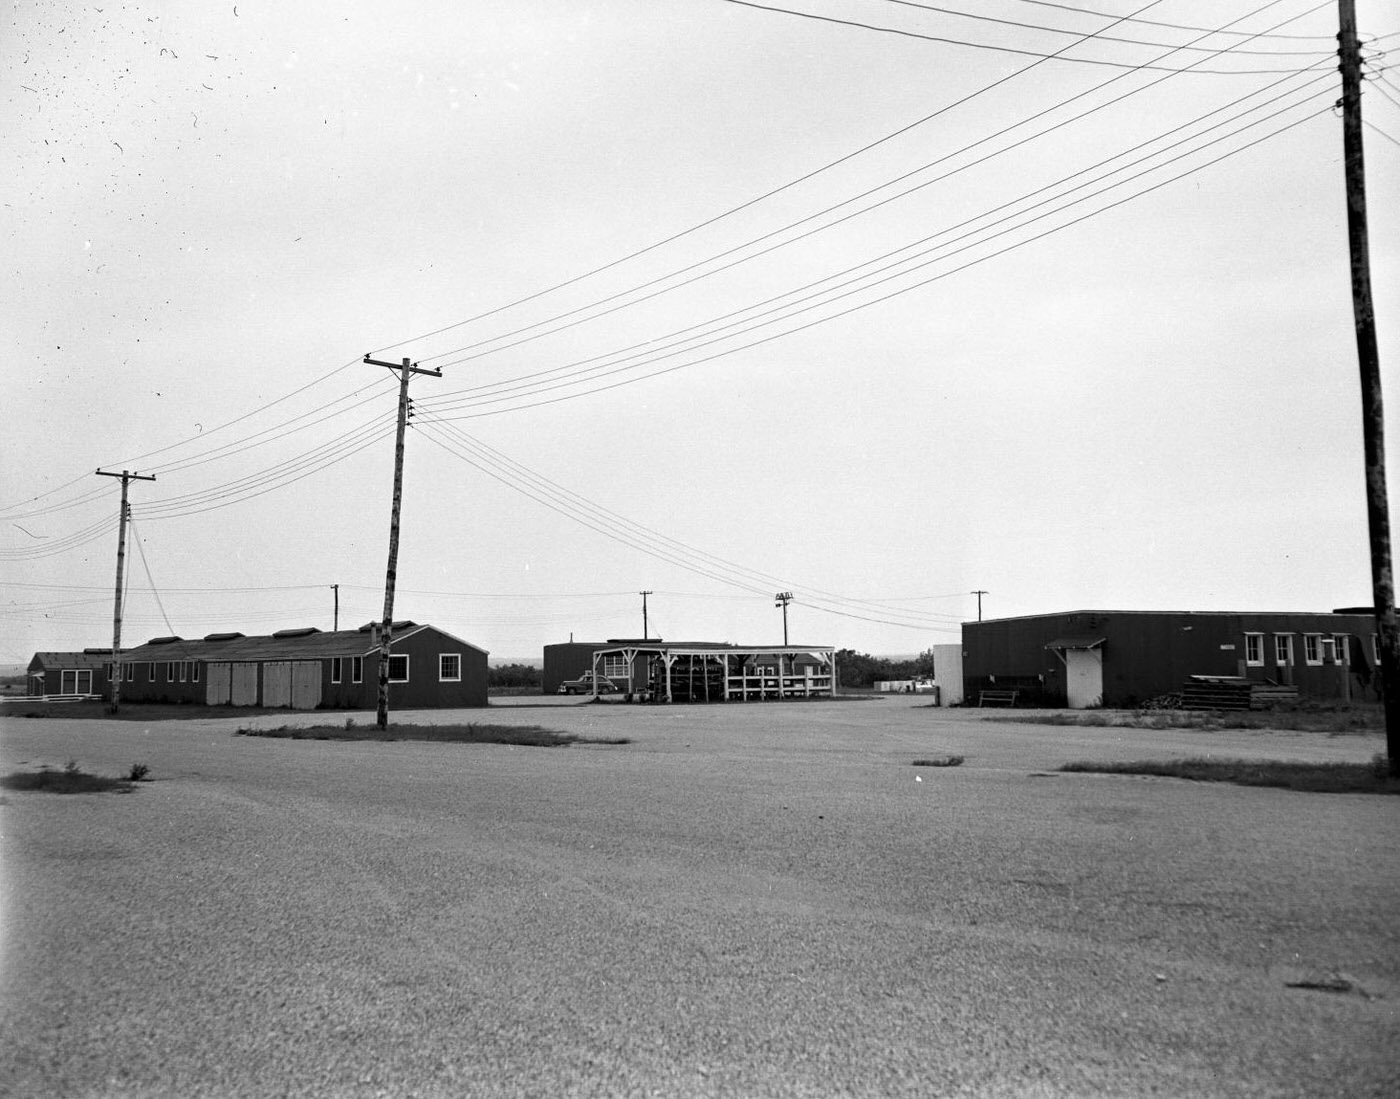 Rural Barrack Buildings, Exterior Showing Empty Property, 1950.